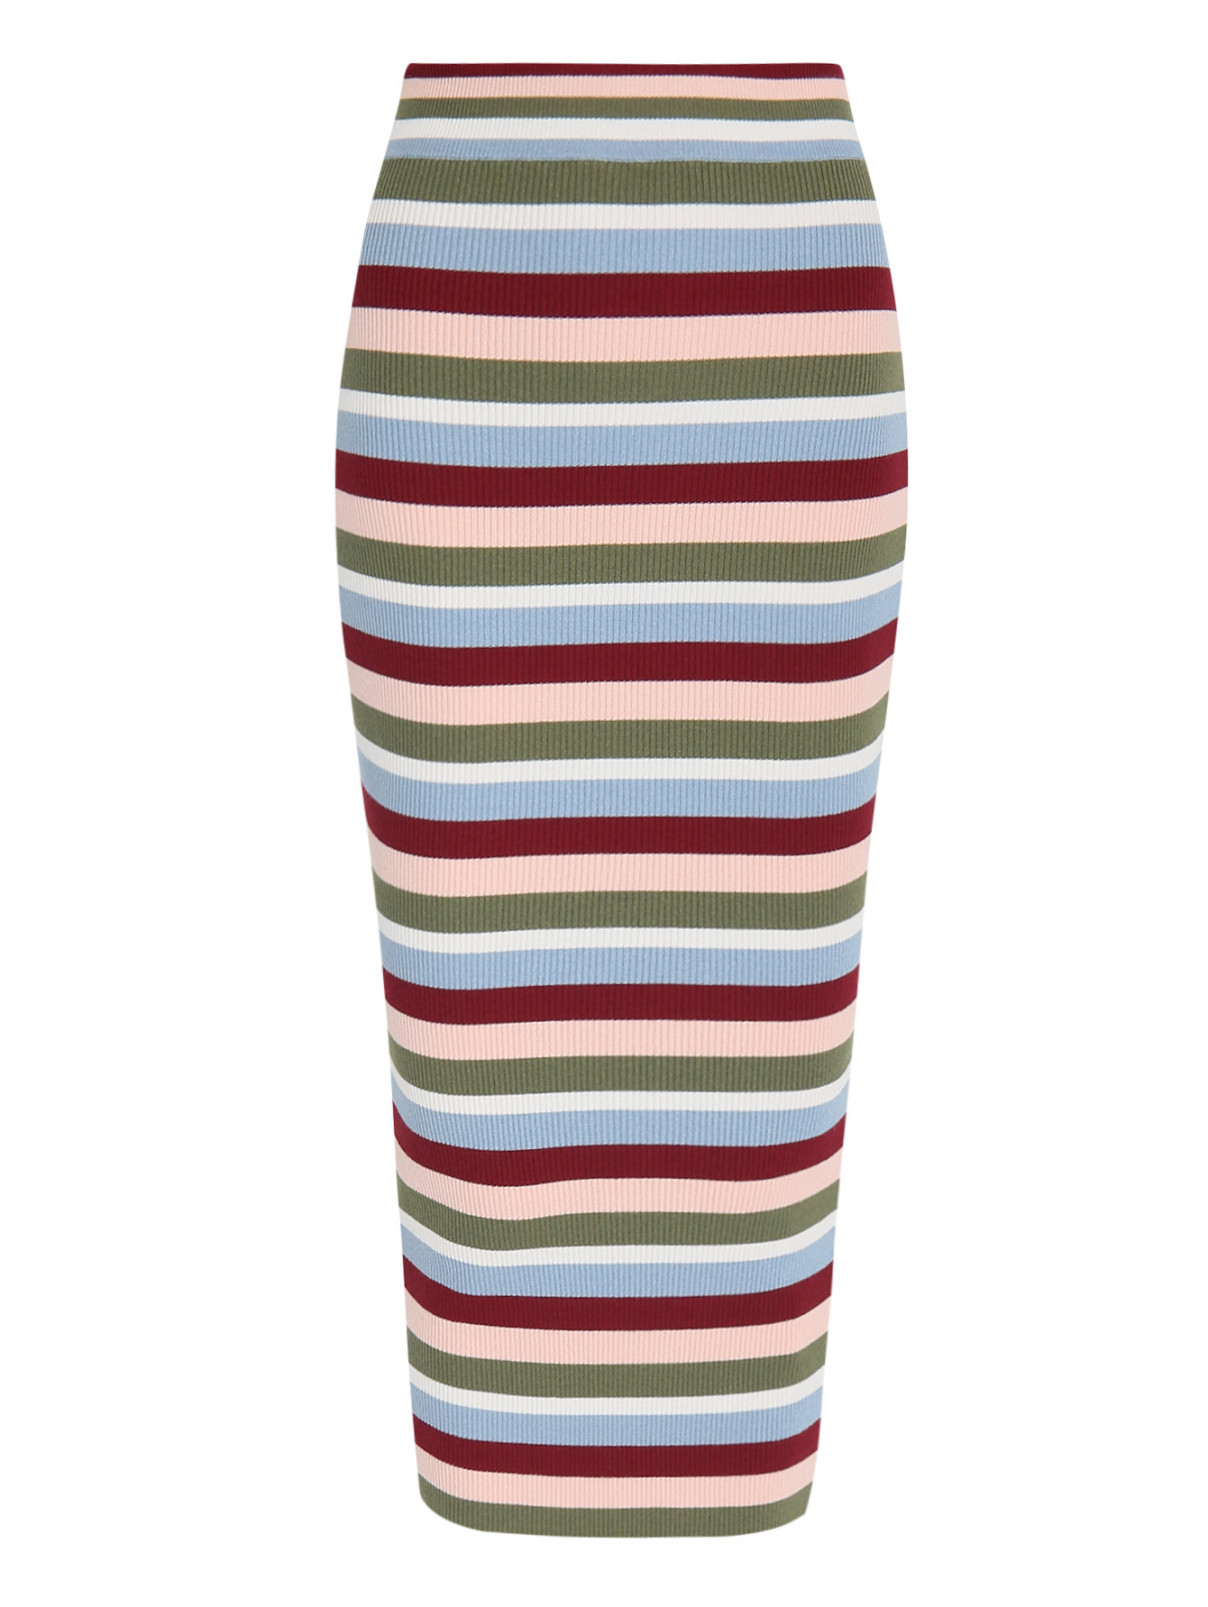 Трикотажная юбка-карандаш с узором I'M Isola Marras  –  Общий вид  – Цвет:  Узор